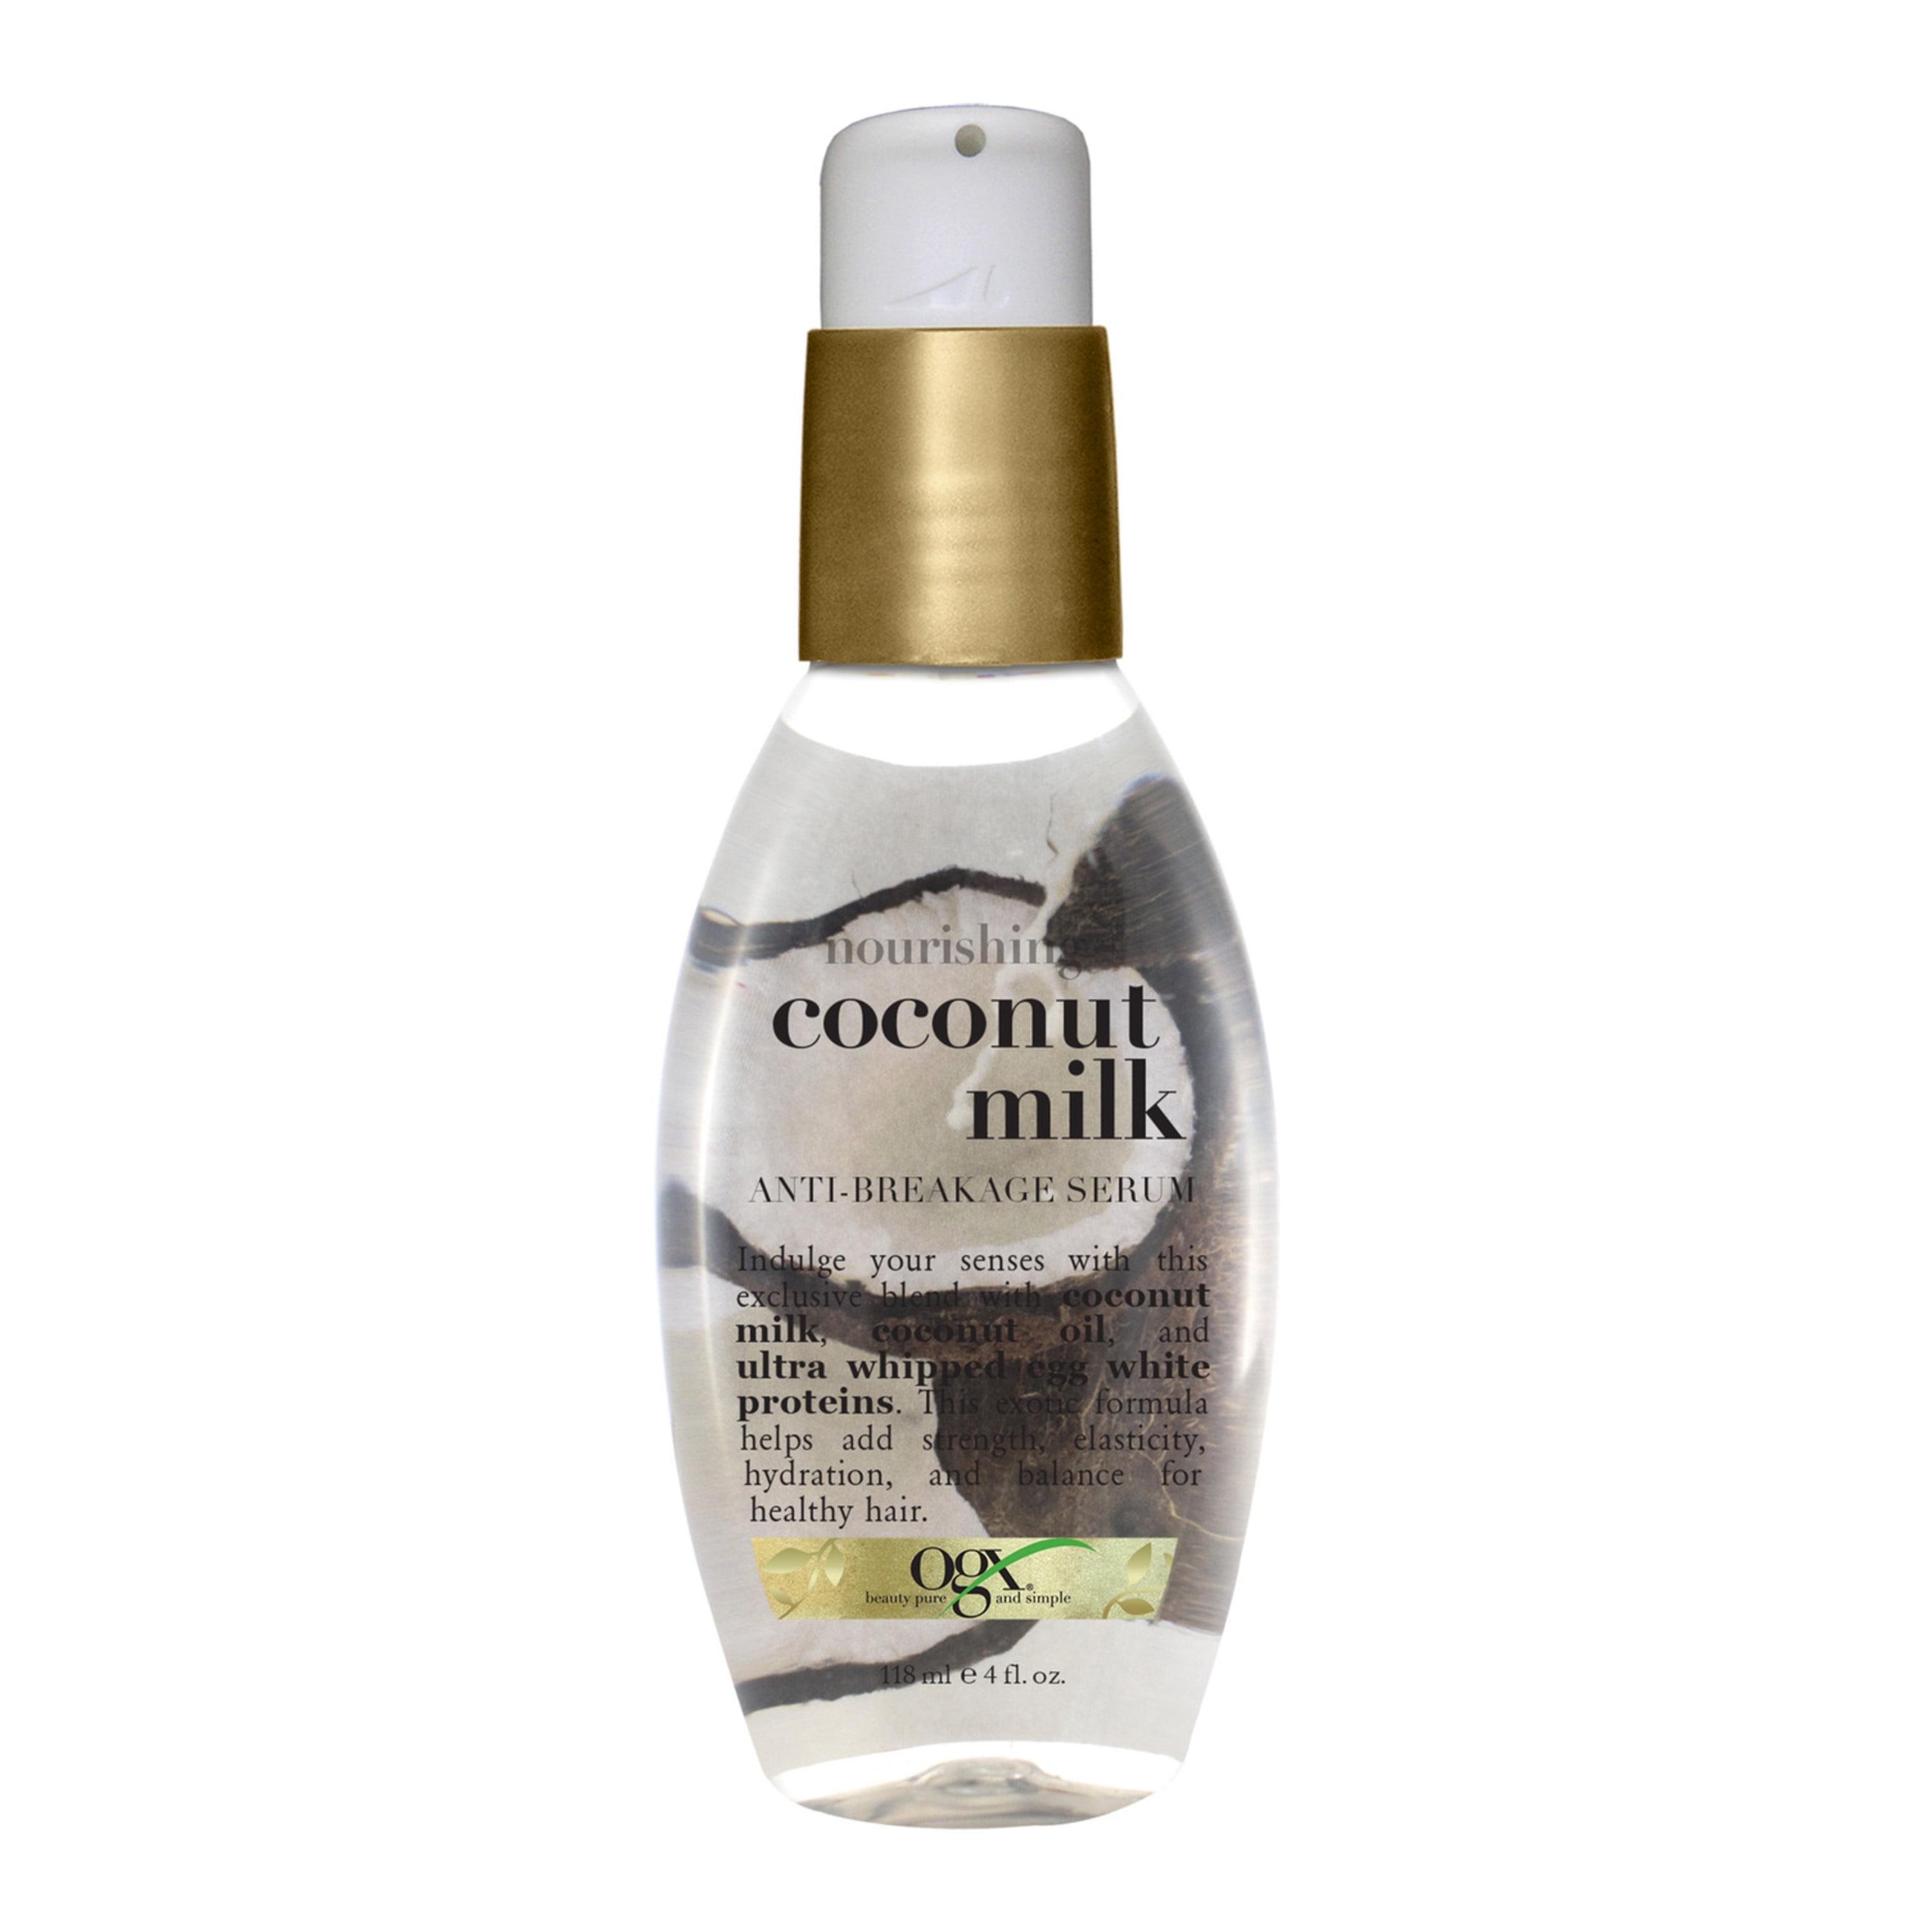 OGX Coconut Milk Moisturizing Strength & Shine, Leave-In Treatment Hair Serum with Egg White Protein, 4 fl oz